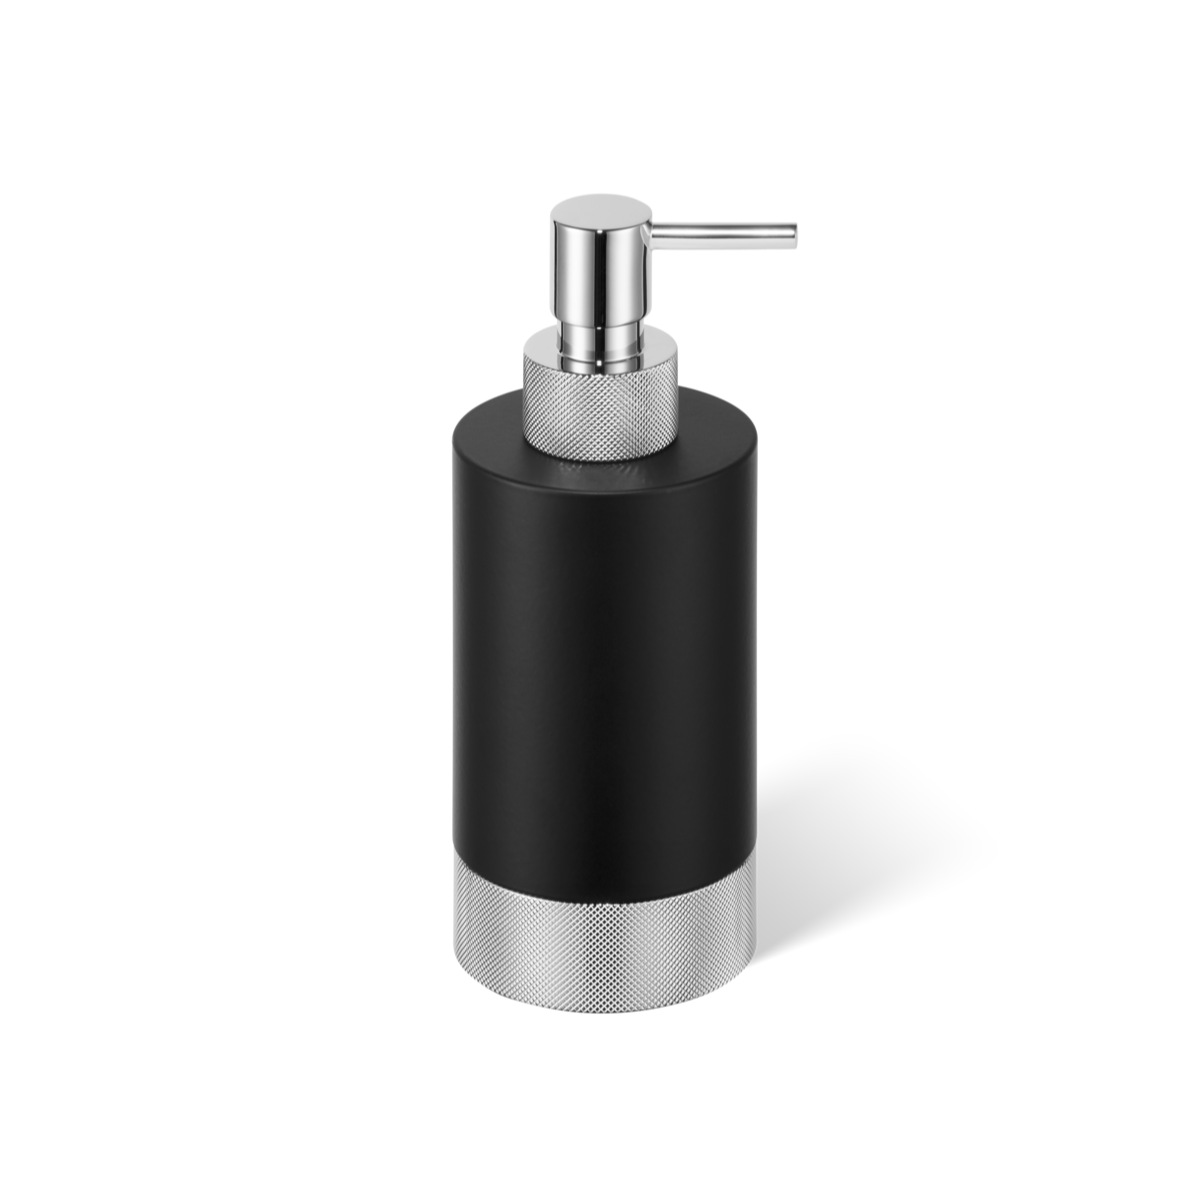 DW CLUB SSP 1 Soap dispenser - Black Matte / Chrome